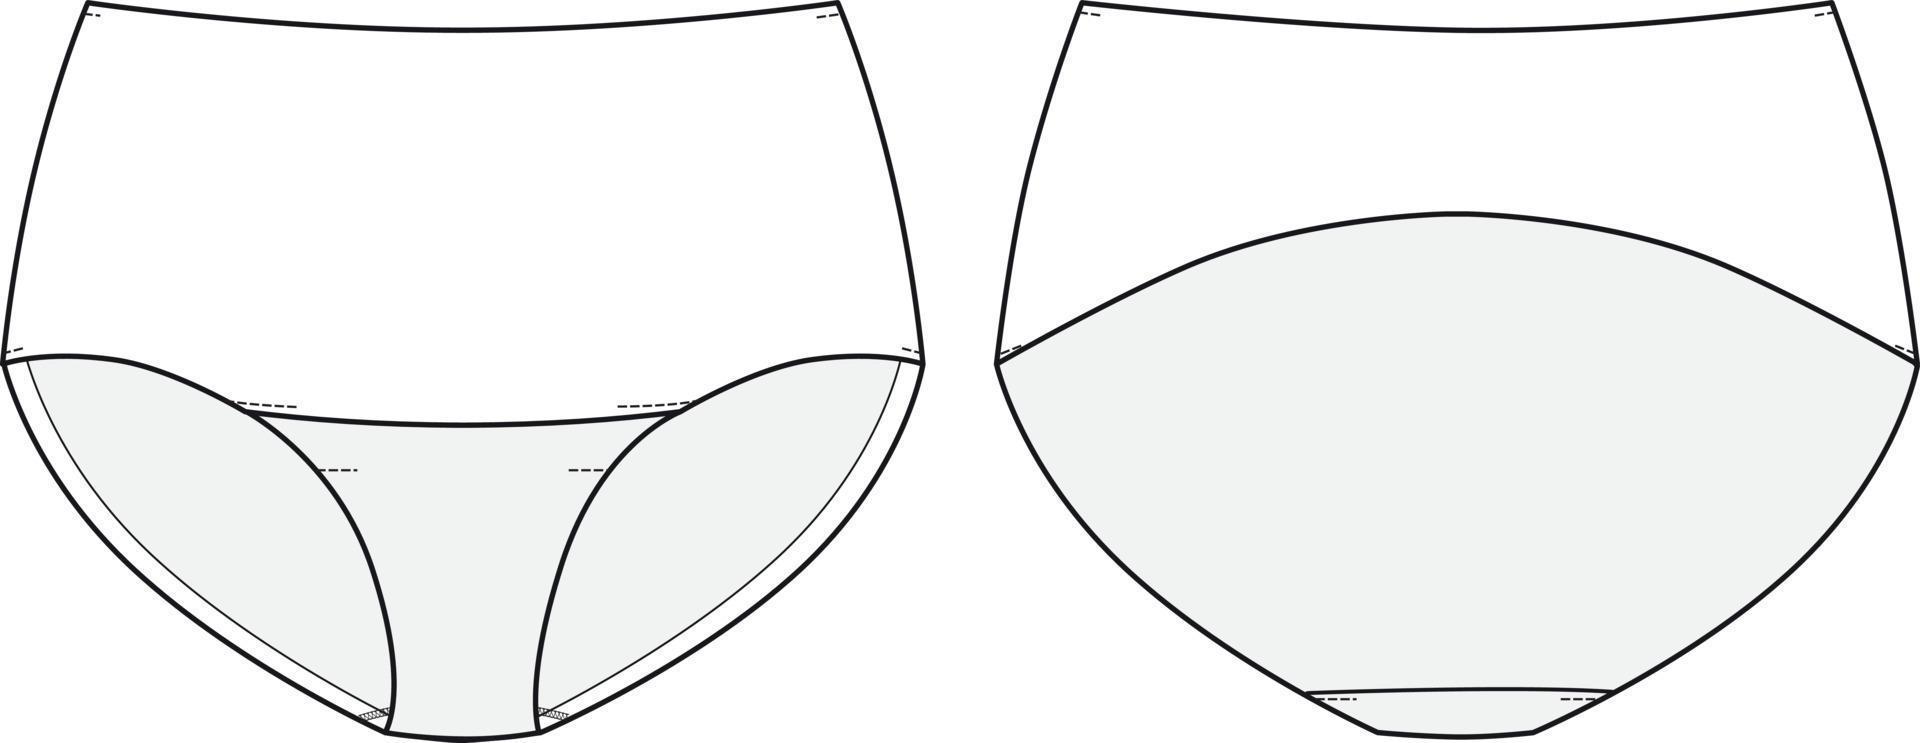 Ilustración de ropa interior moldeadora. boceto plano de bragas modeladoras editables vector